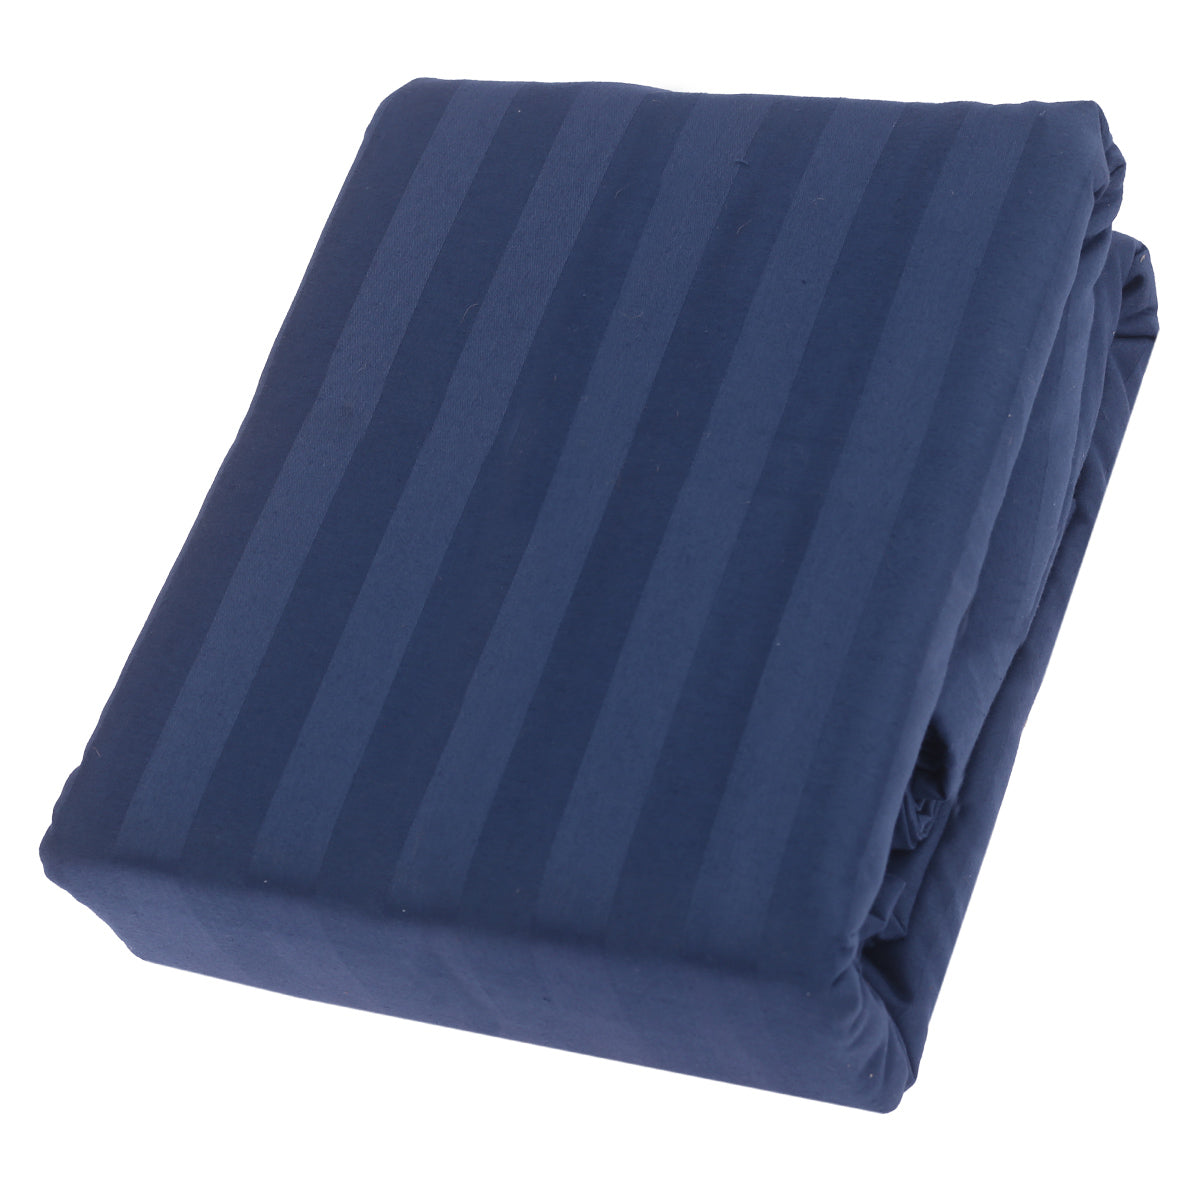 Blue Satin Double Quilt Cover 90x96